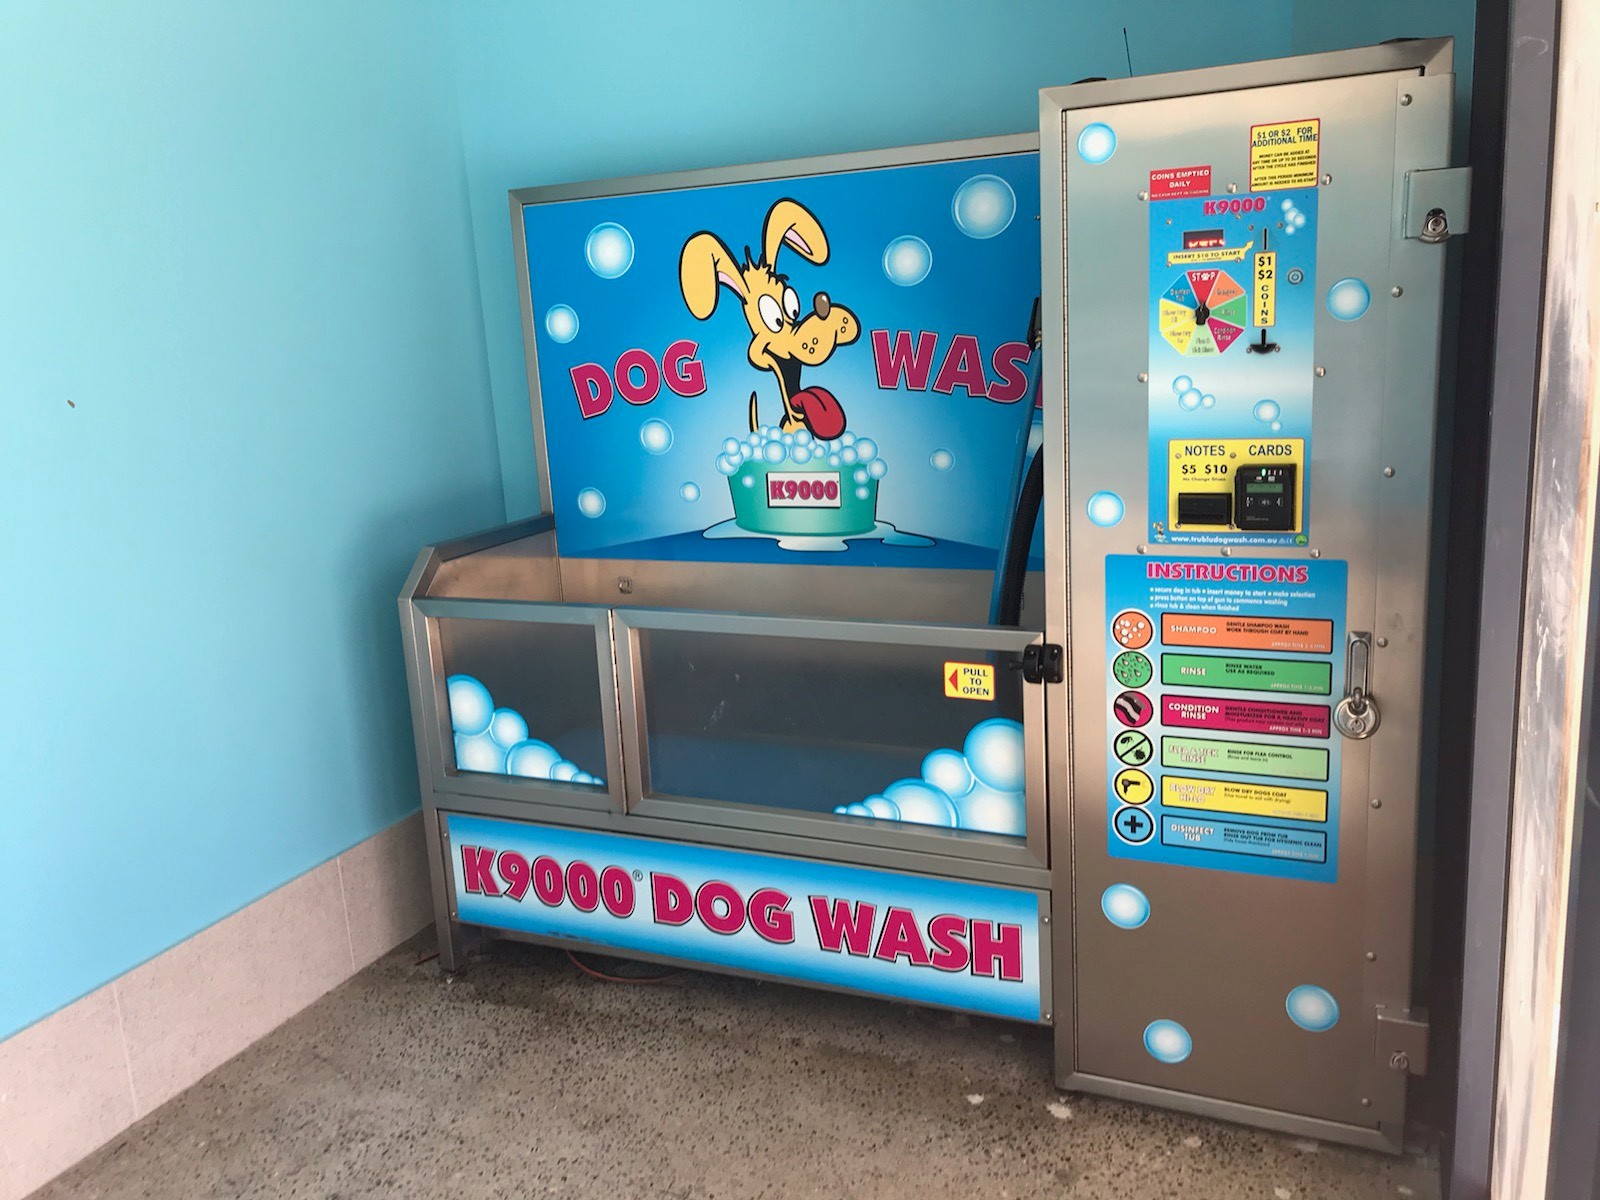 K9000 dog wash machine